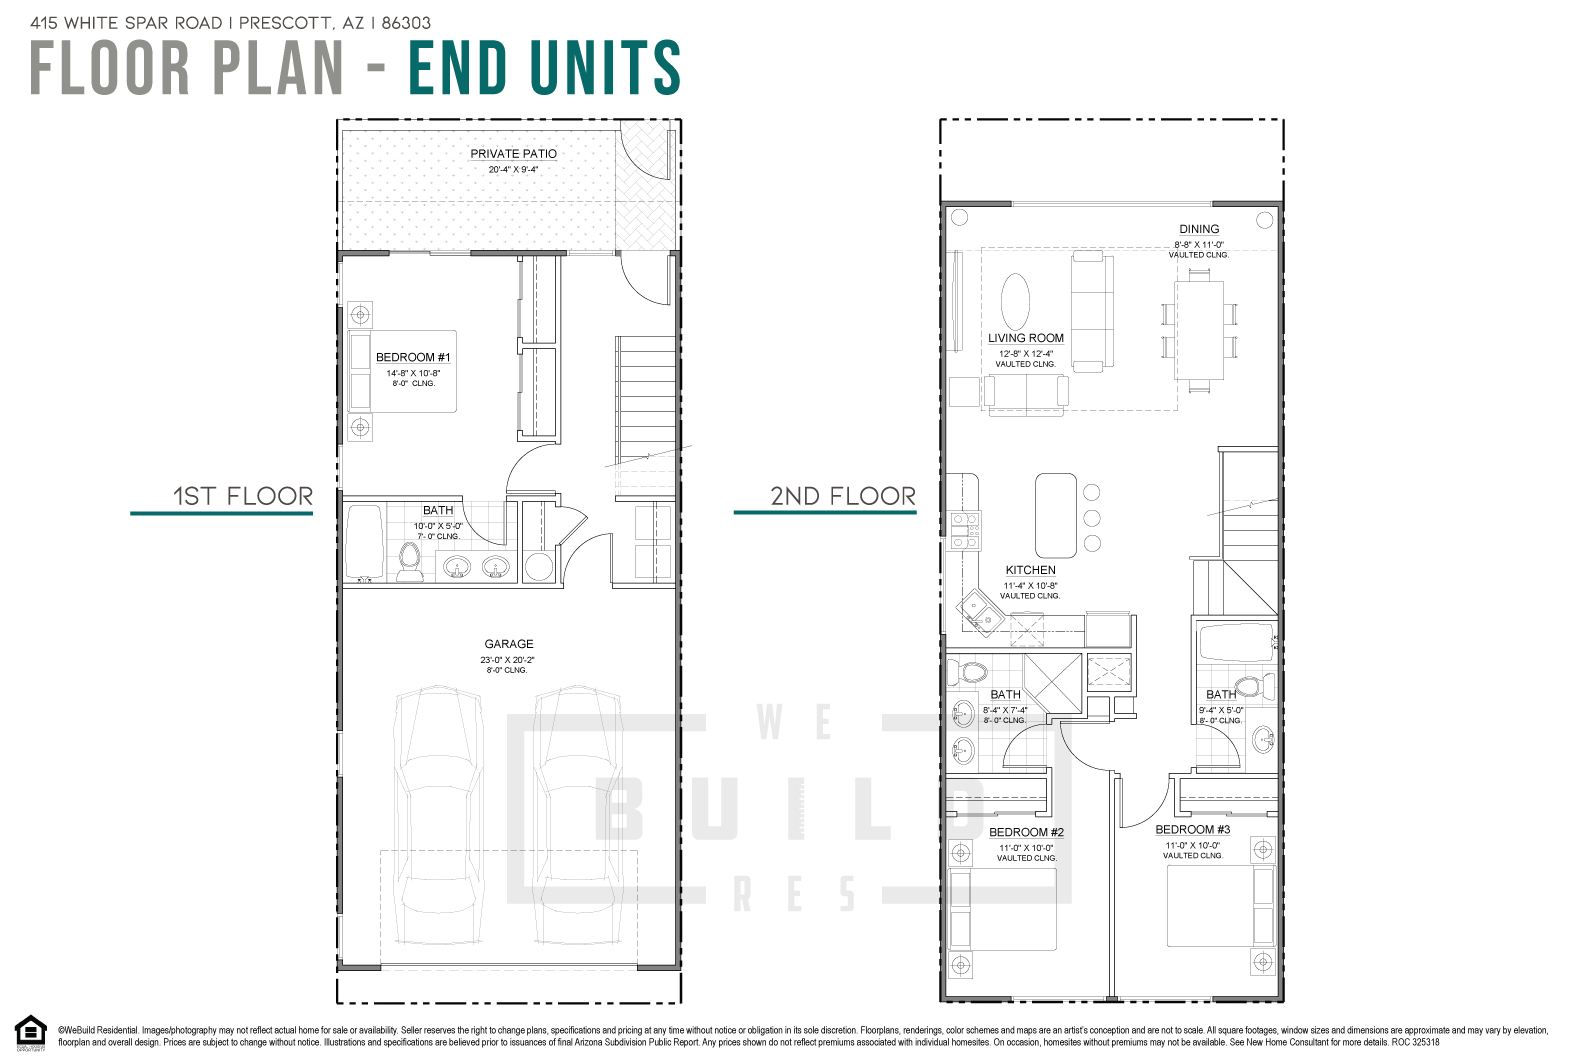 Floorplan - End Units